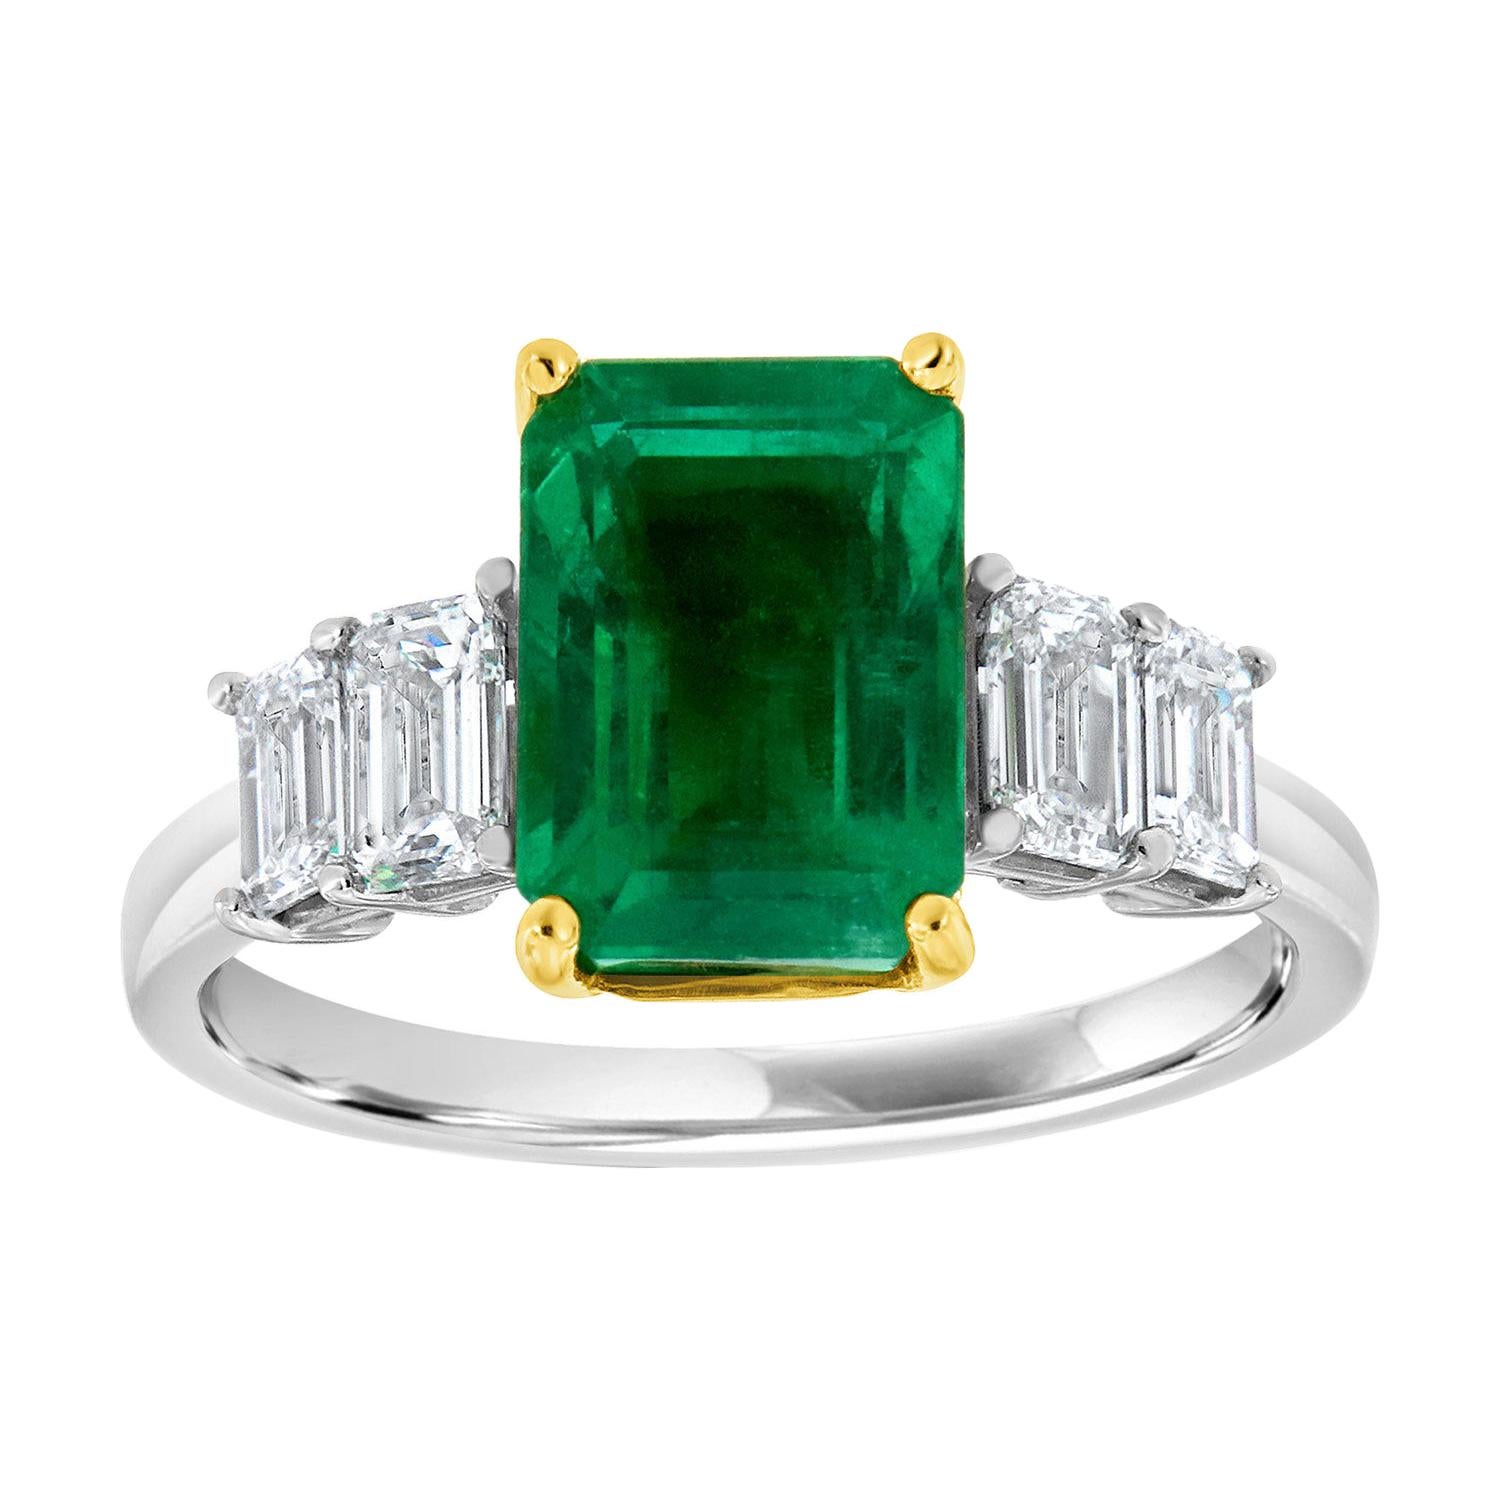 18k White and Yellow Gold Nikki Green Emerald Diamond Ring 'Center: 3.29- Carat'